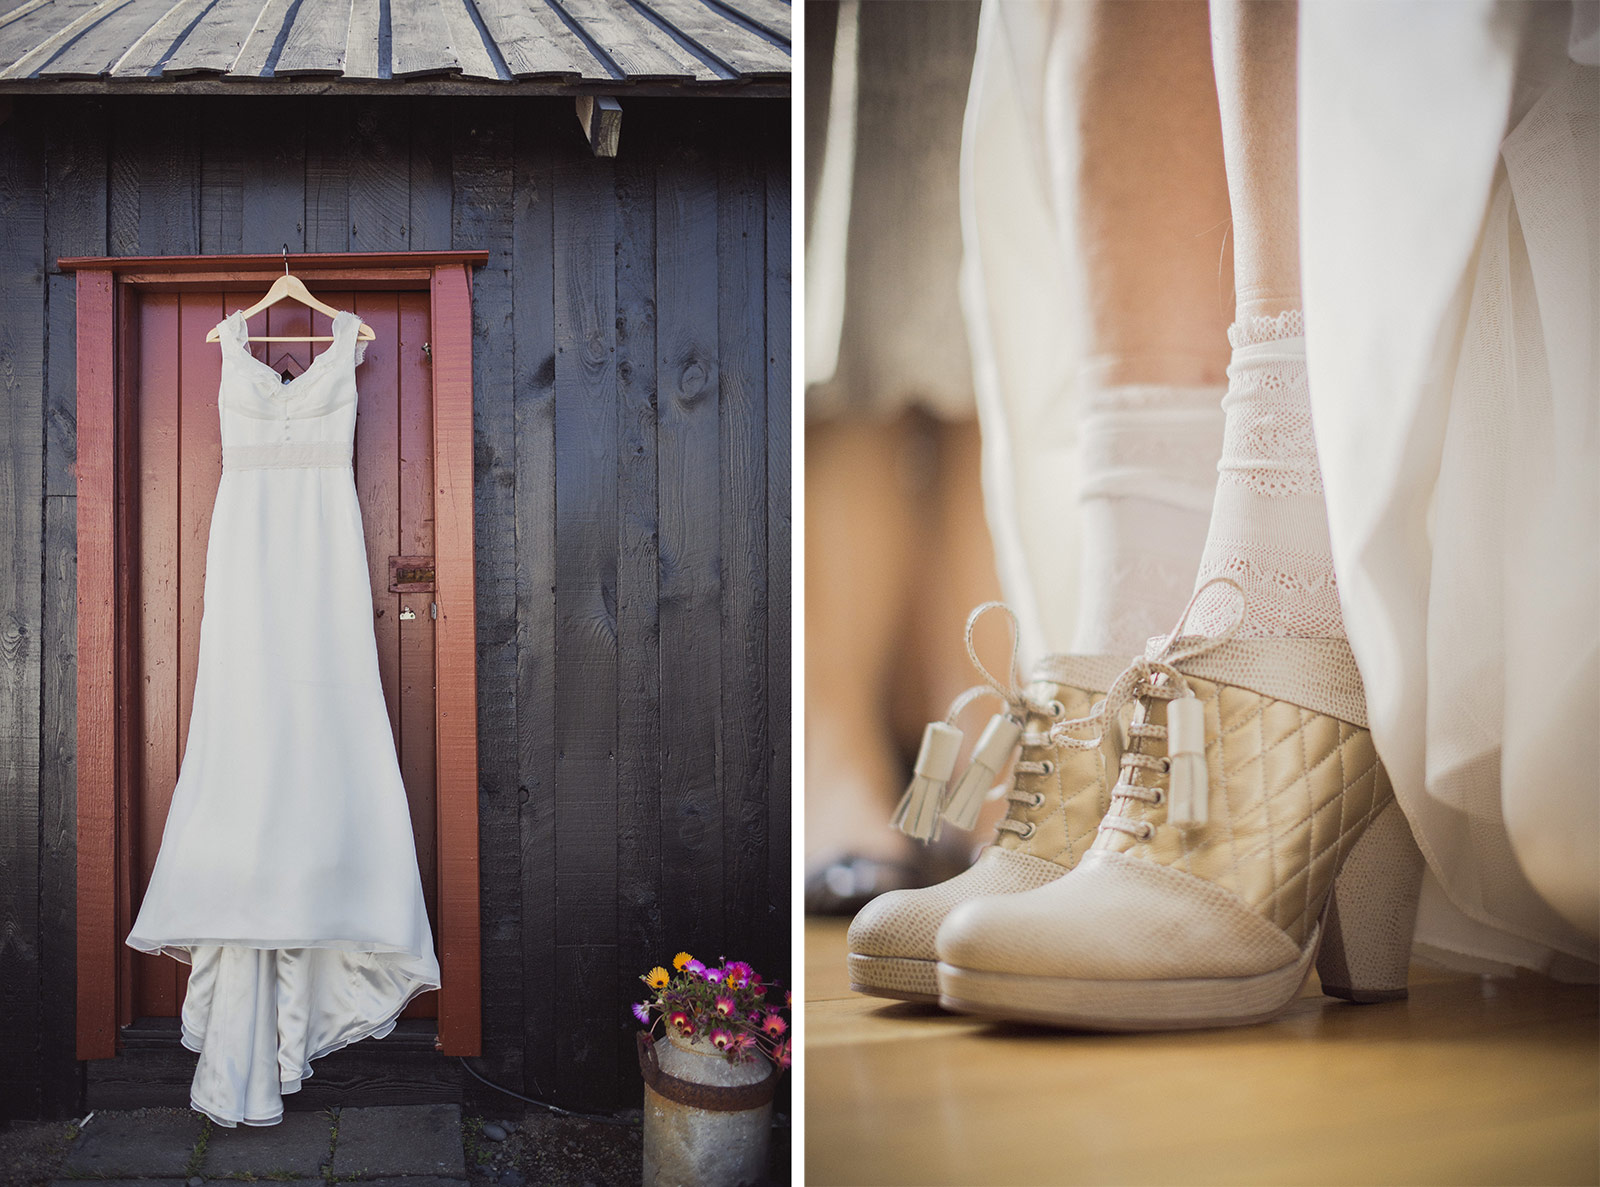 A wedding dress hanging in front of a door.